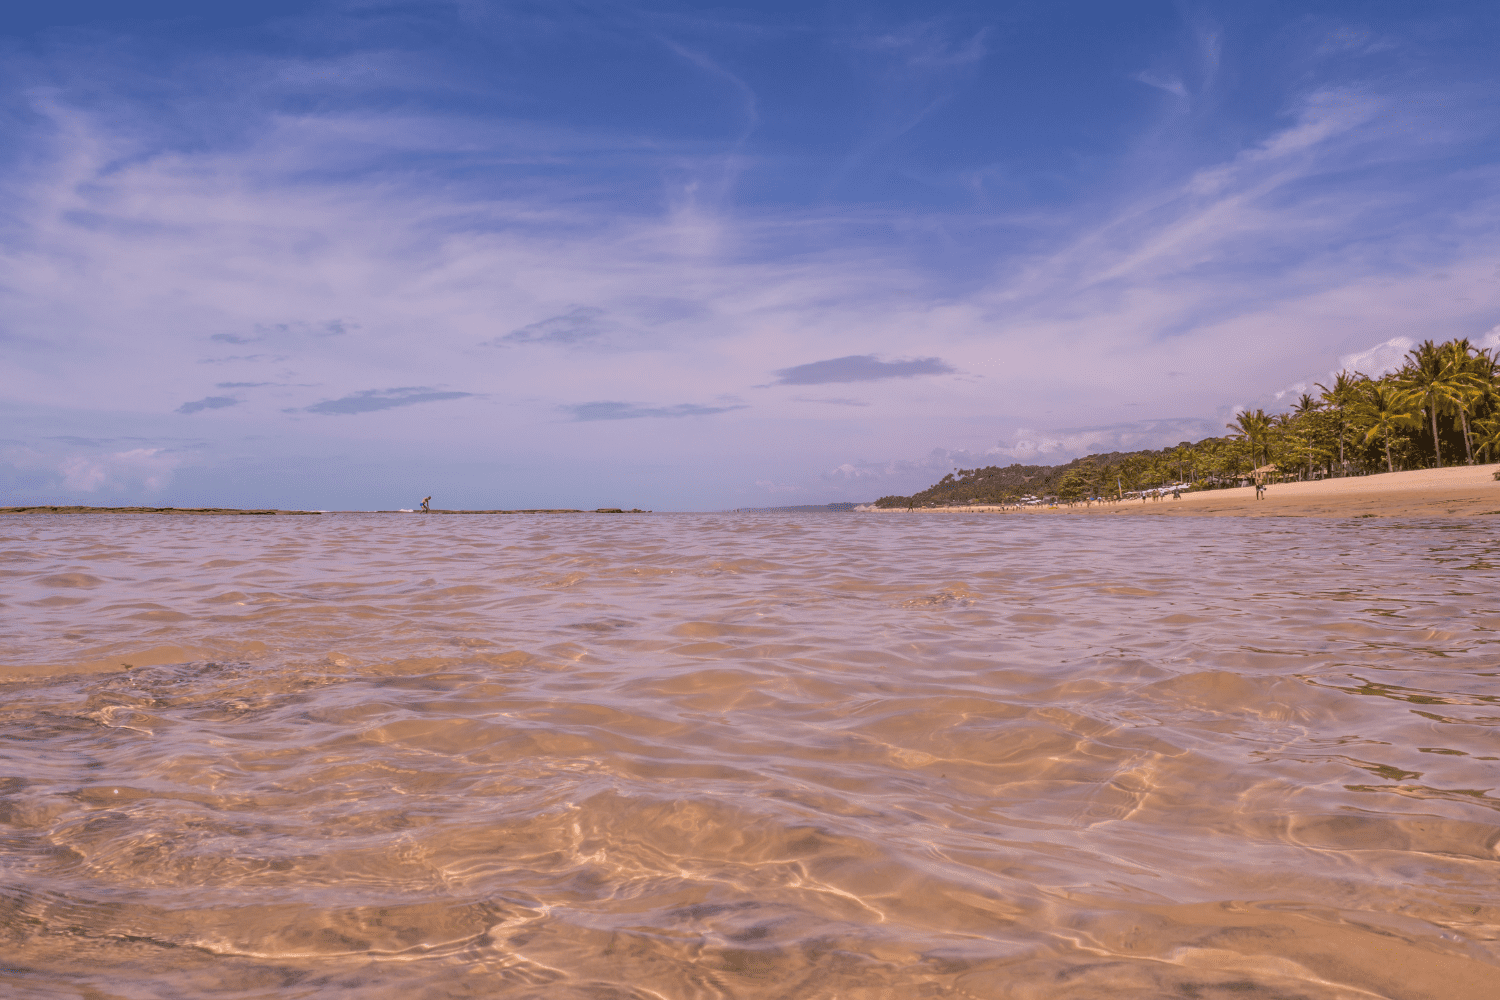 Praia do Mucugê - Arraial d’Ajuda, Bahia